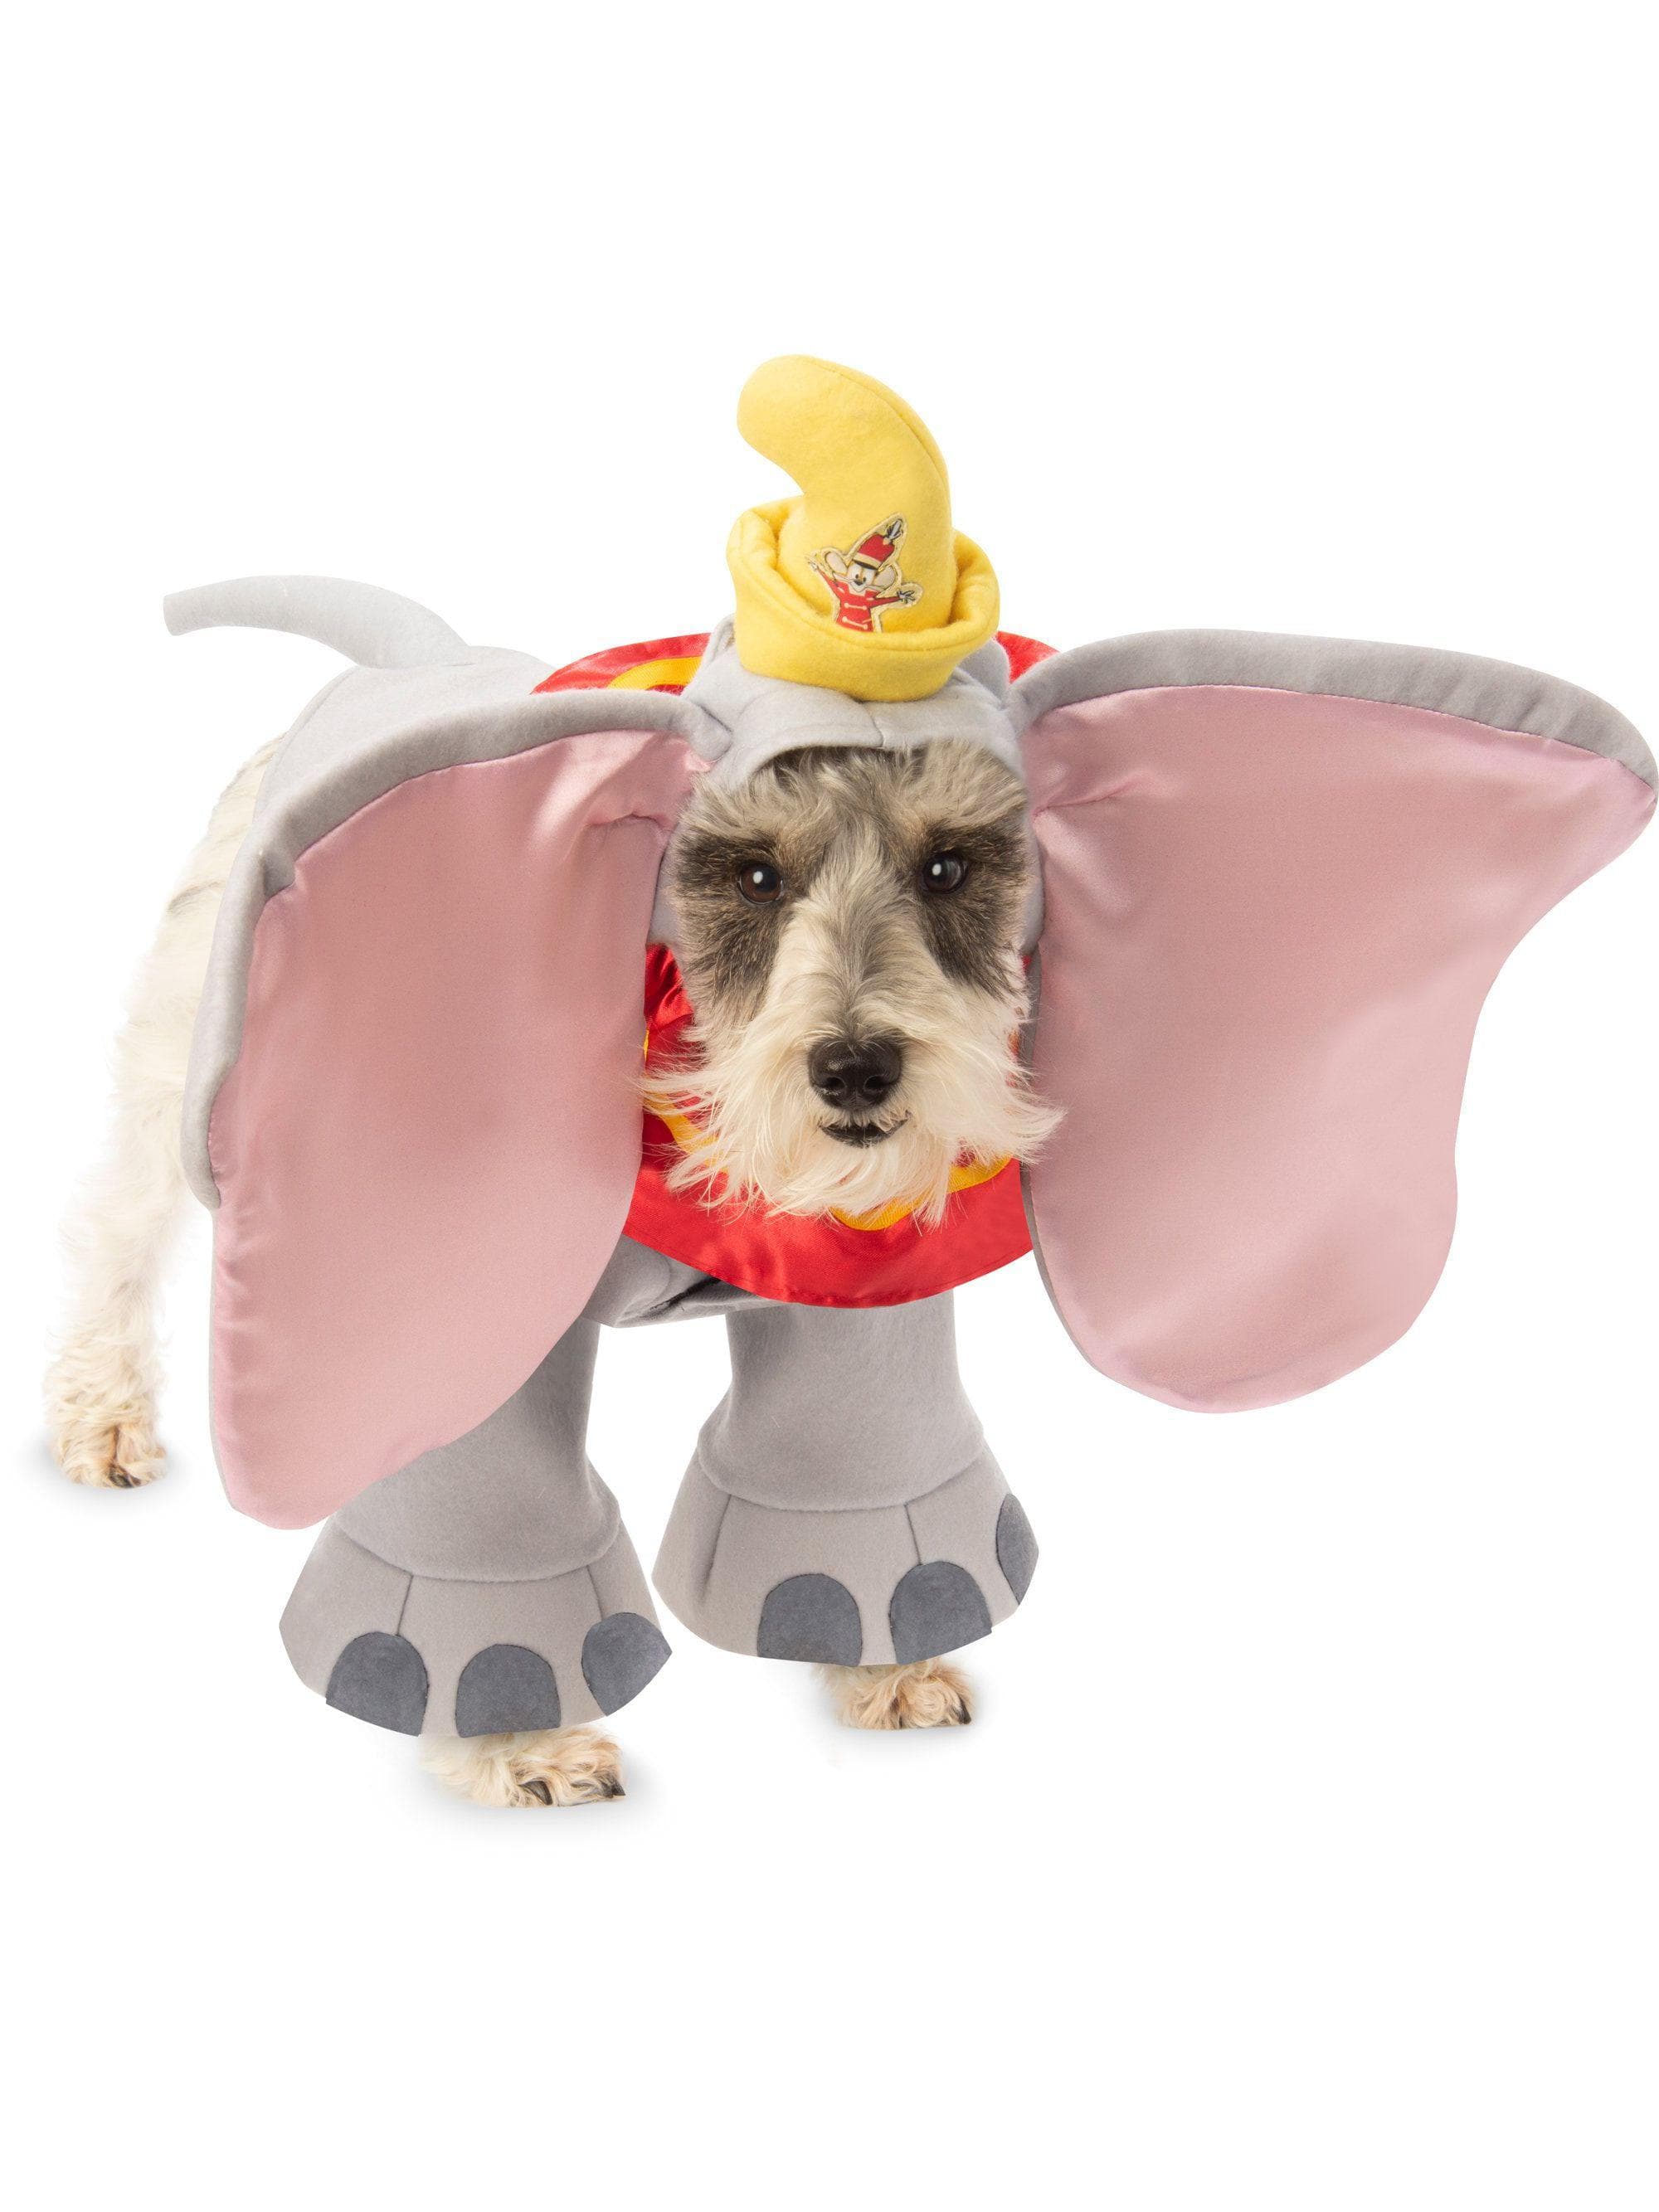 Dumbo Pet Costume - costumes.com